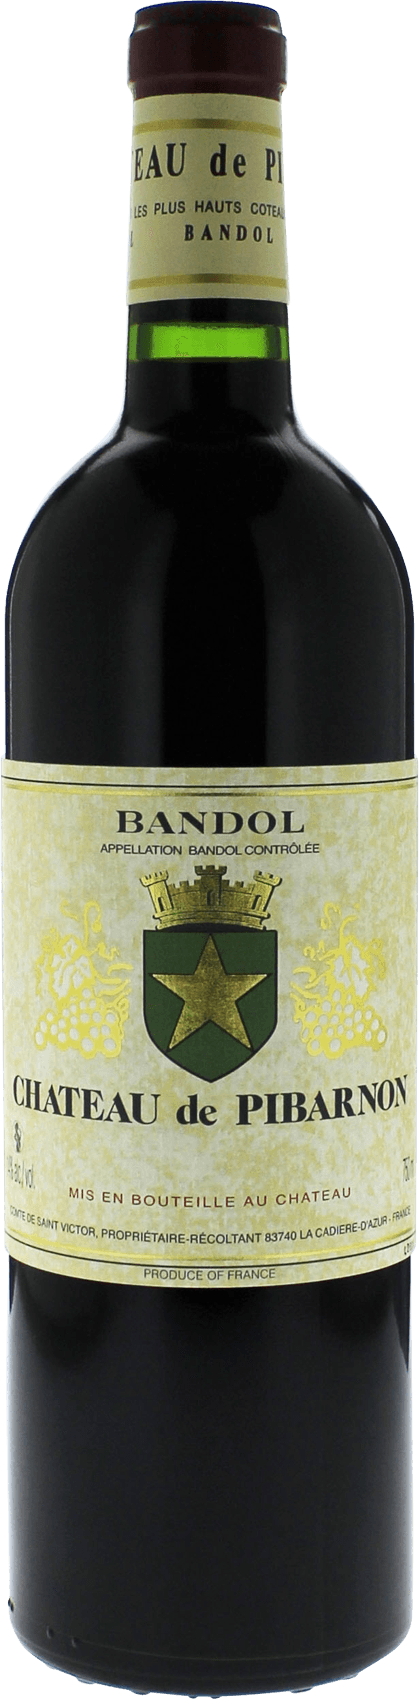 Bandol domaine pibarnon rouge 2017  Bandol, Provence